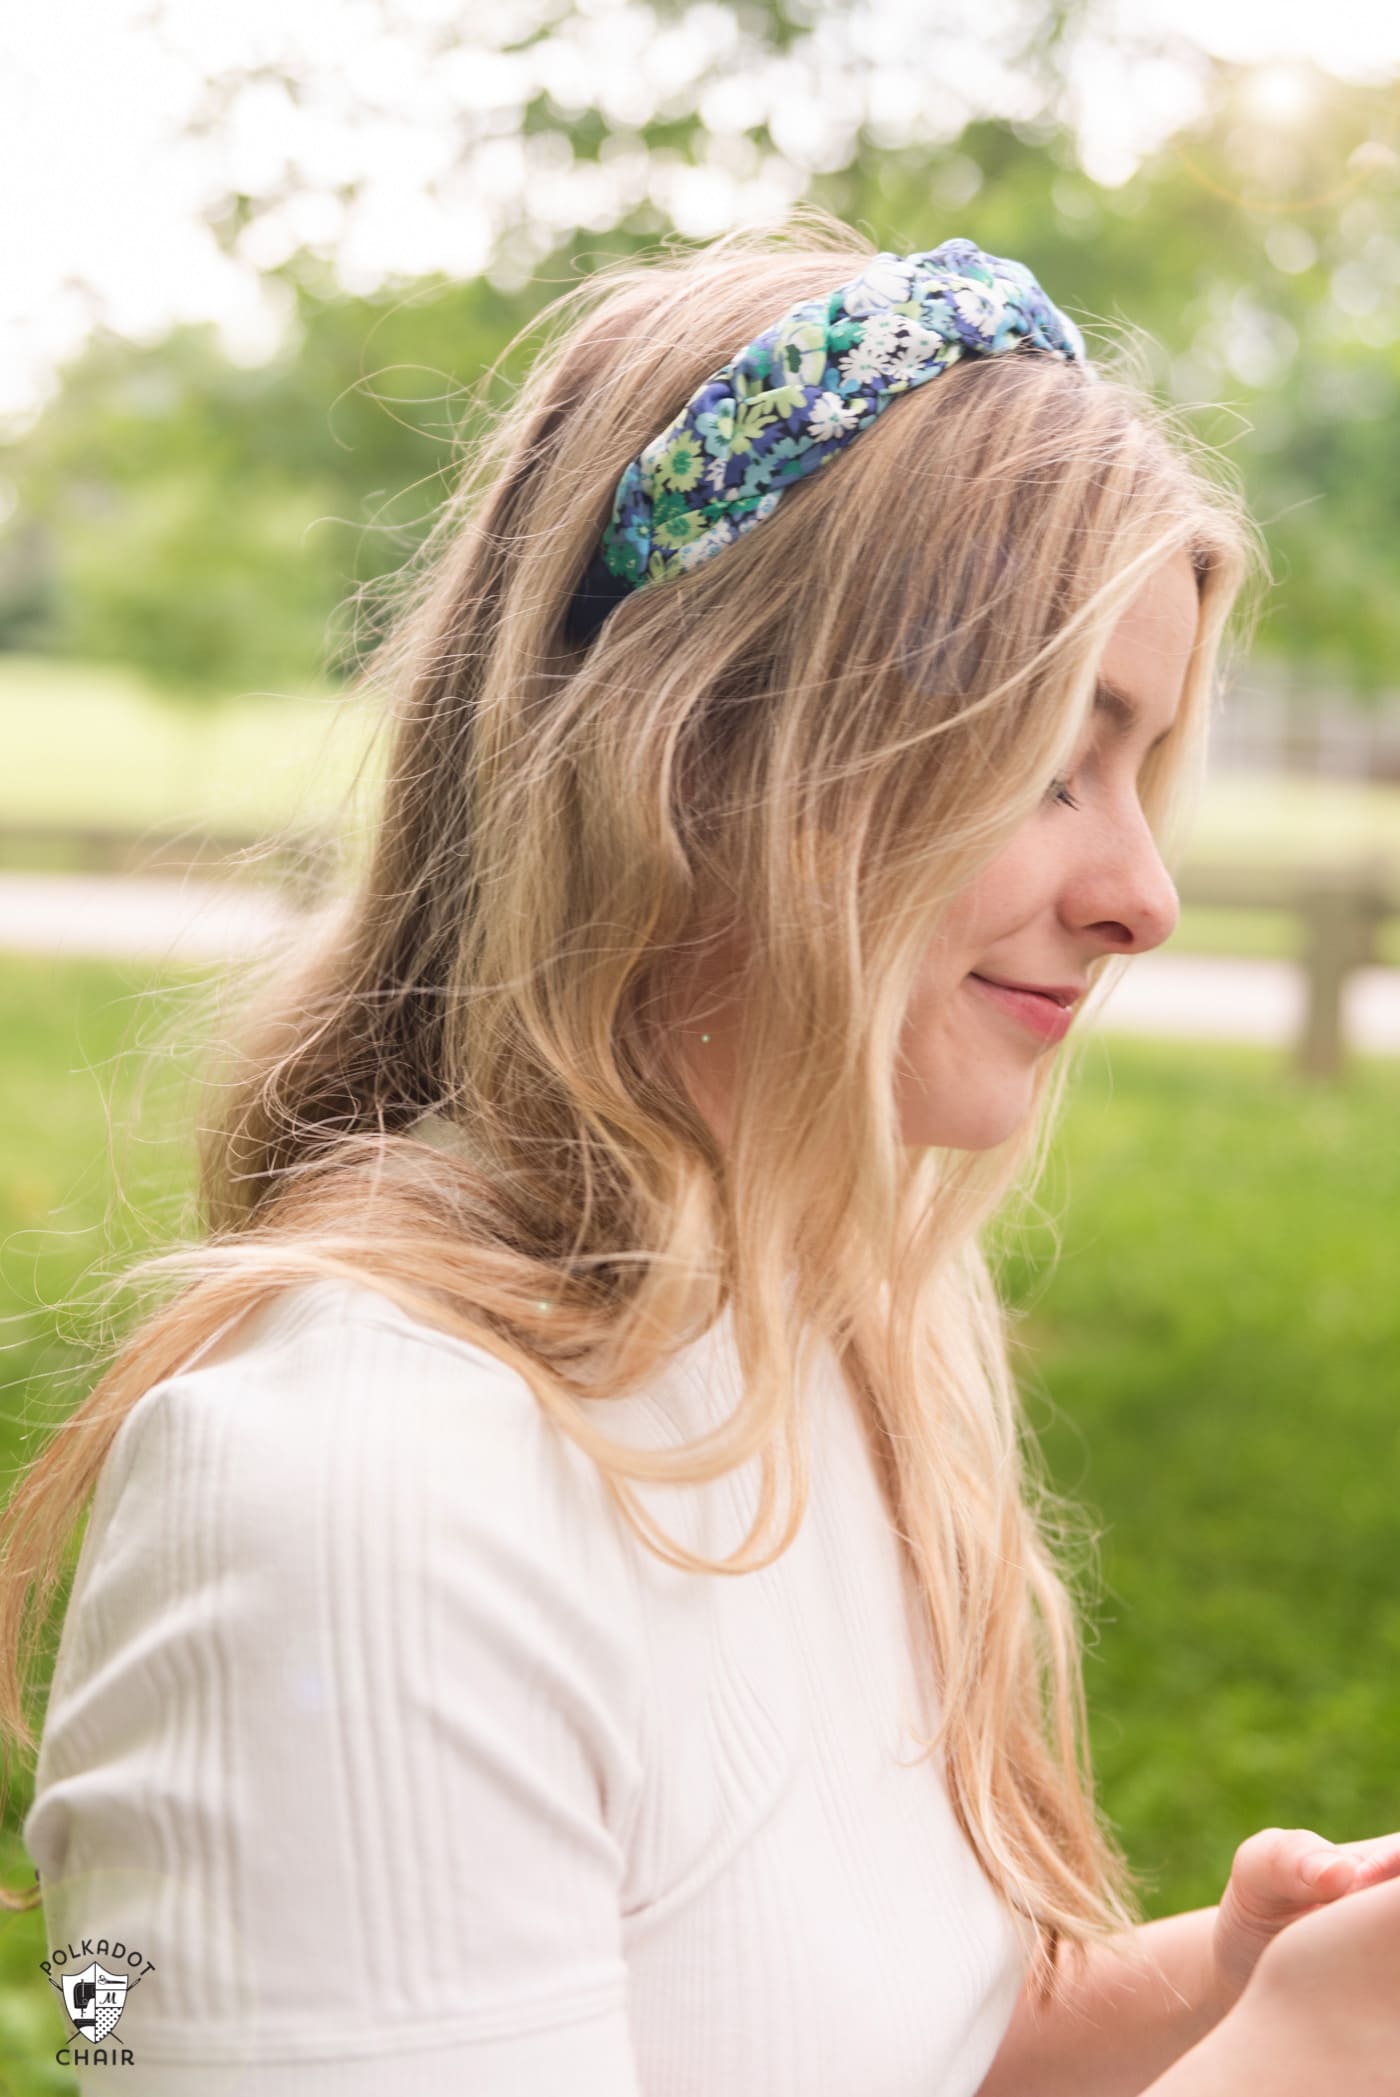 profile view of girl wearing headband outdoors